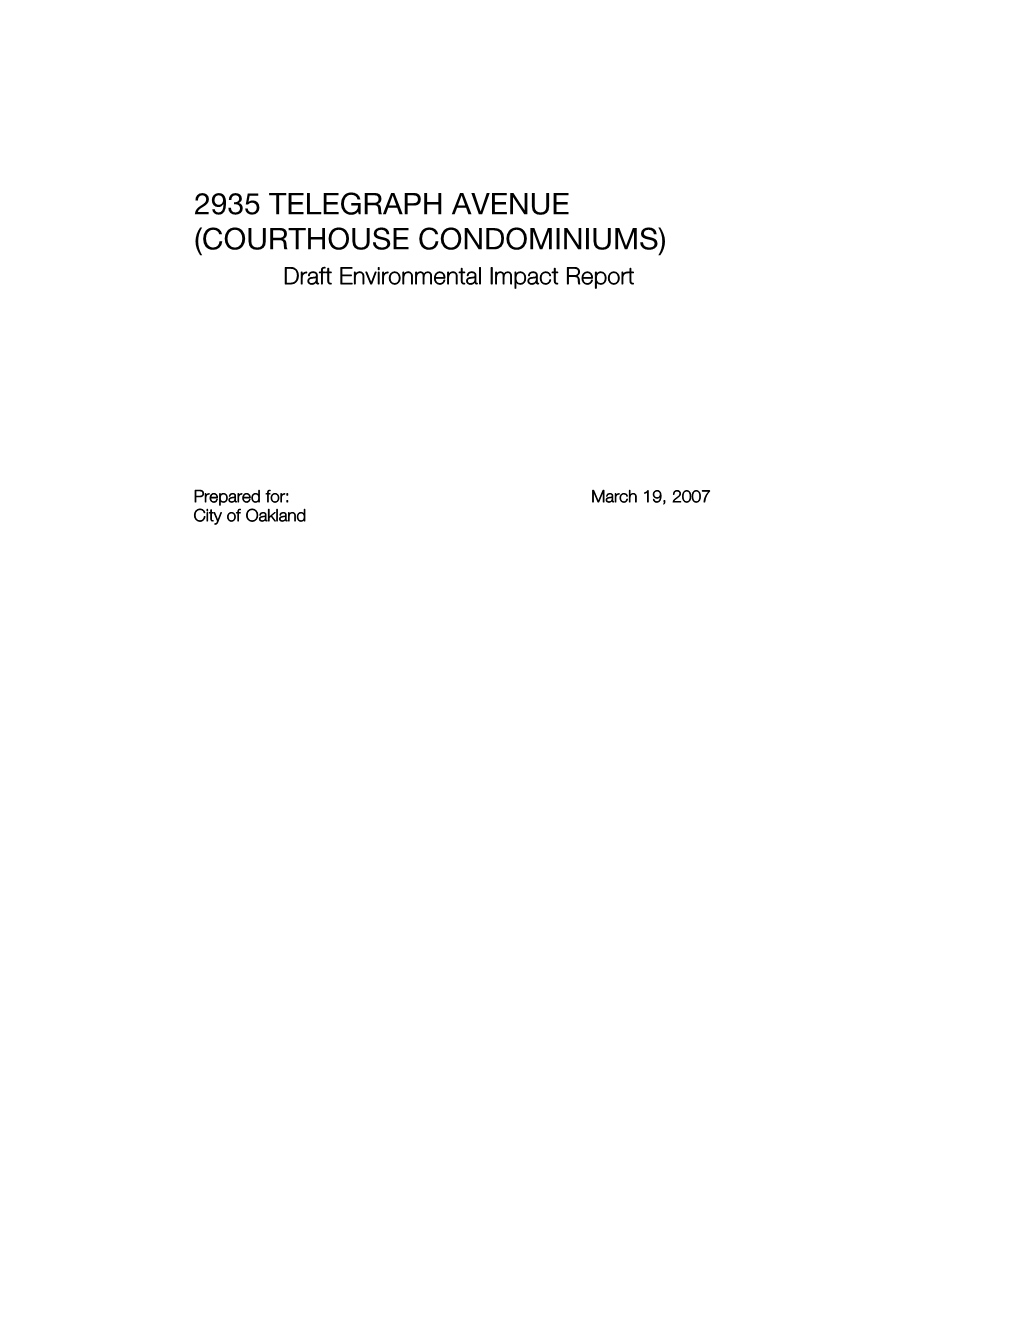 2935 TELEGRAPH AVENUE (COURTHOUSE CONDOMINIUMS) Draft Environmental Impact Report